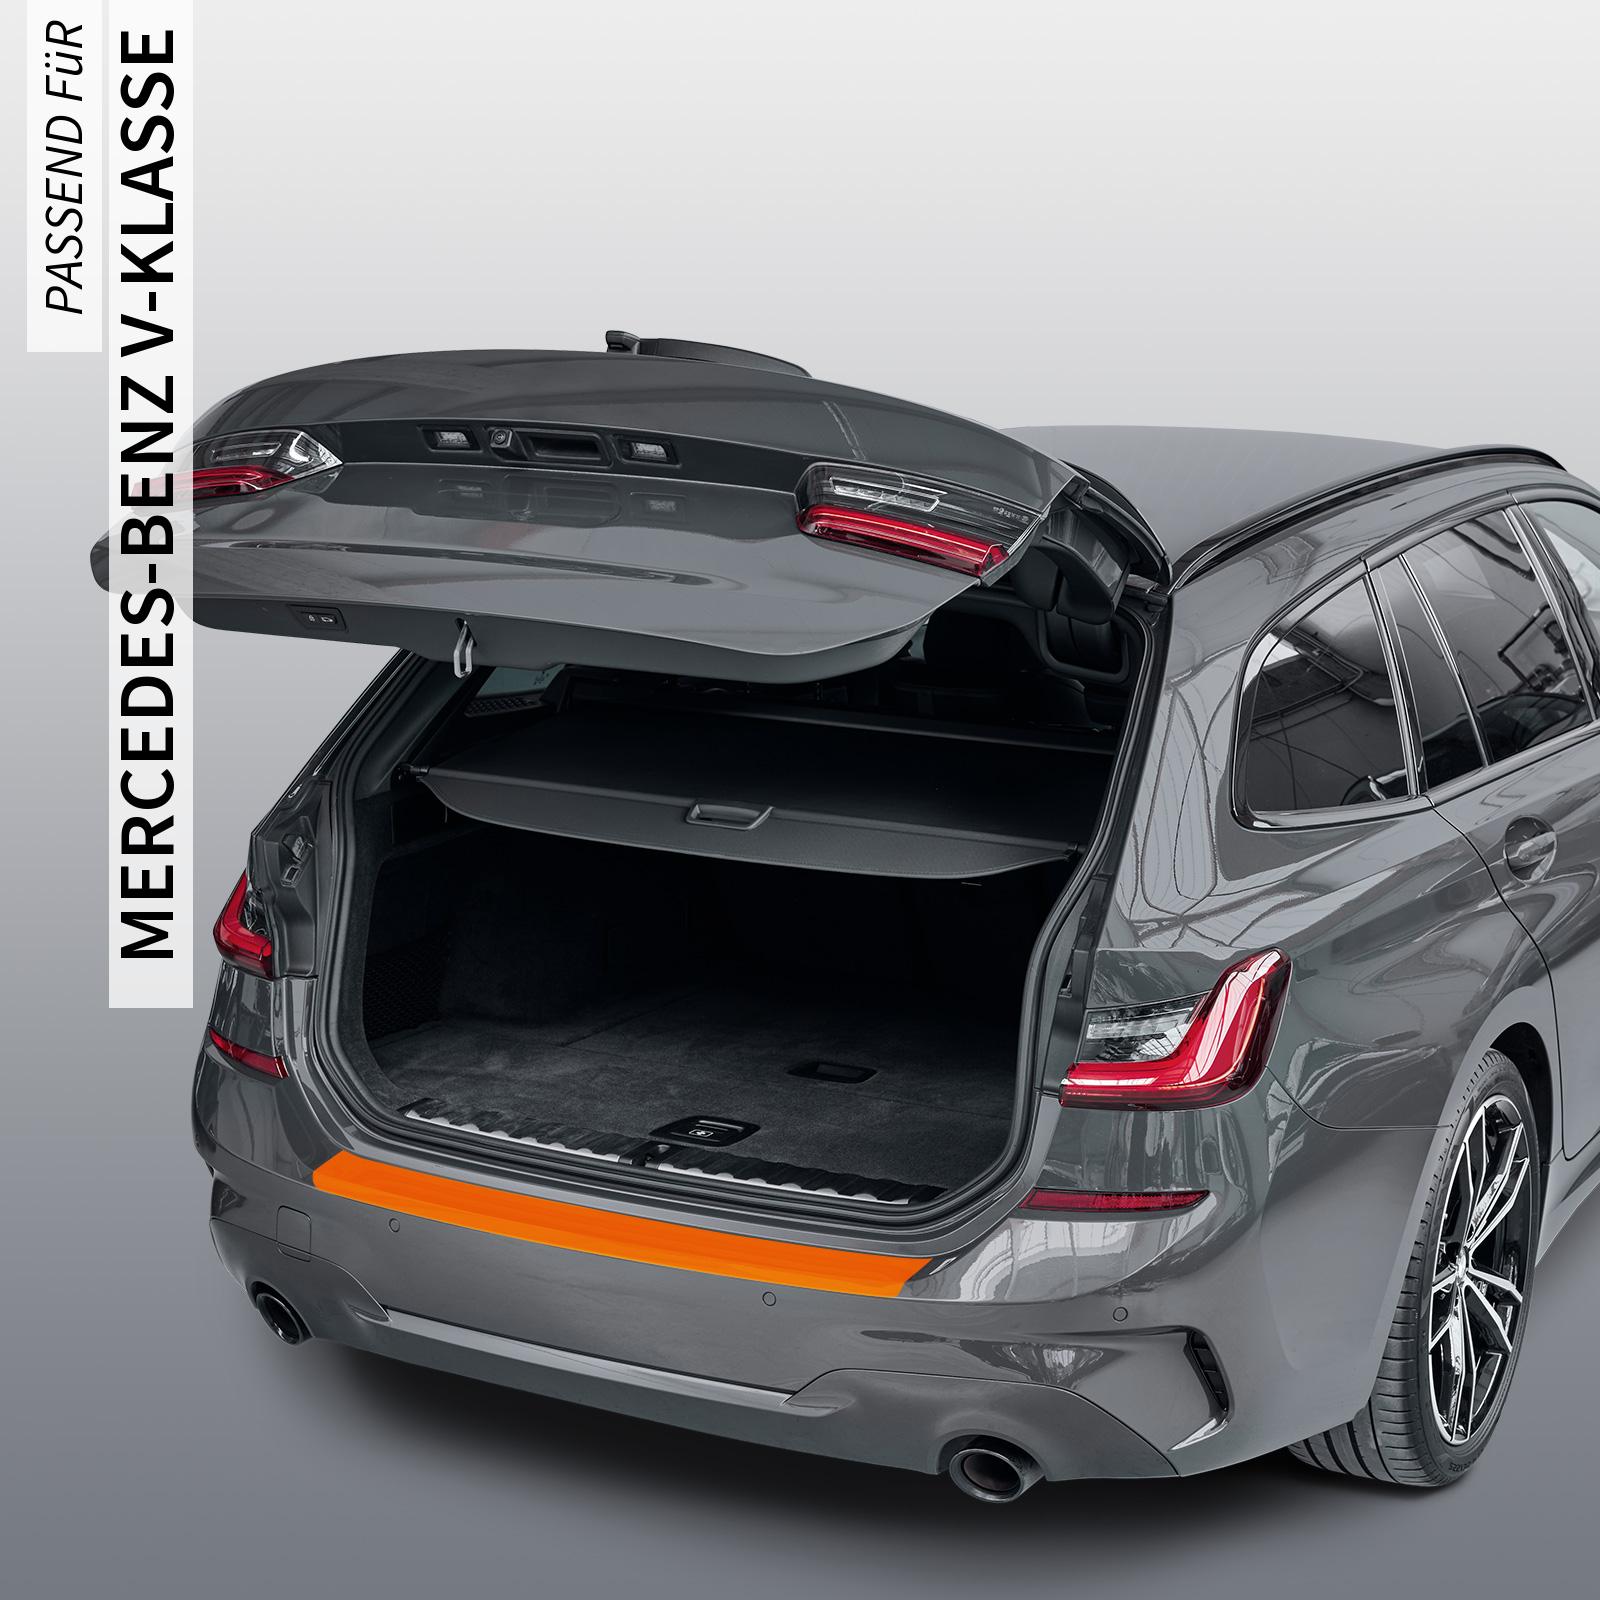 Ladekantenschutzfolie - Transparent Glatt MATT 110 µm stark  für Mercedes-Benz V-Klasse Typ W447, ab BJ 05/2014 + Facelift